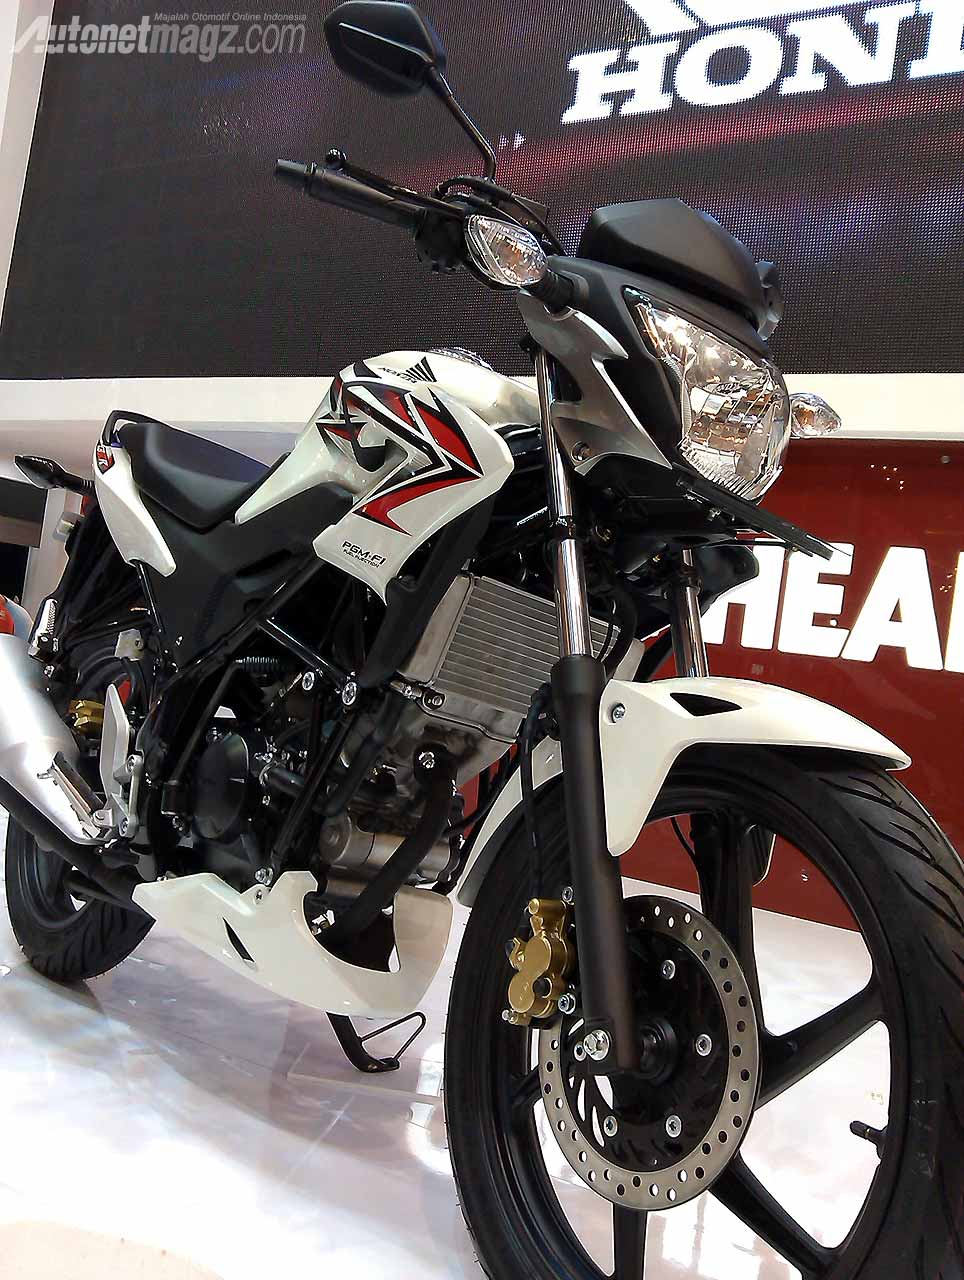 Honda CBR150R Streetfighter White AutonetMagz Review Mobil Dan Motor Baru Indonesia